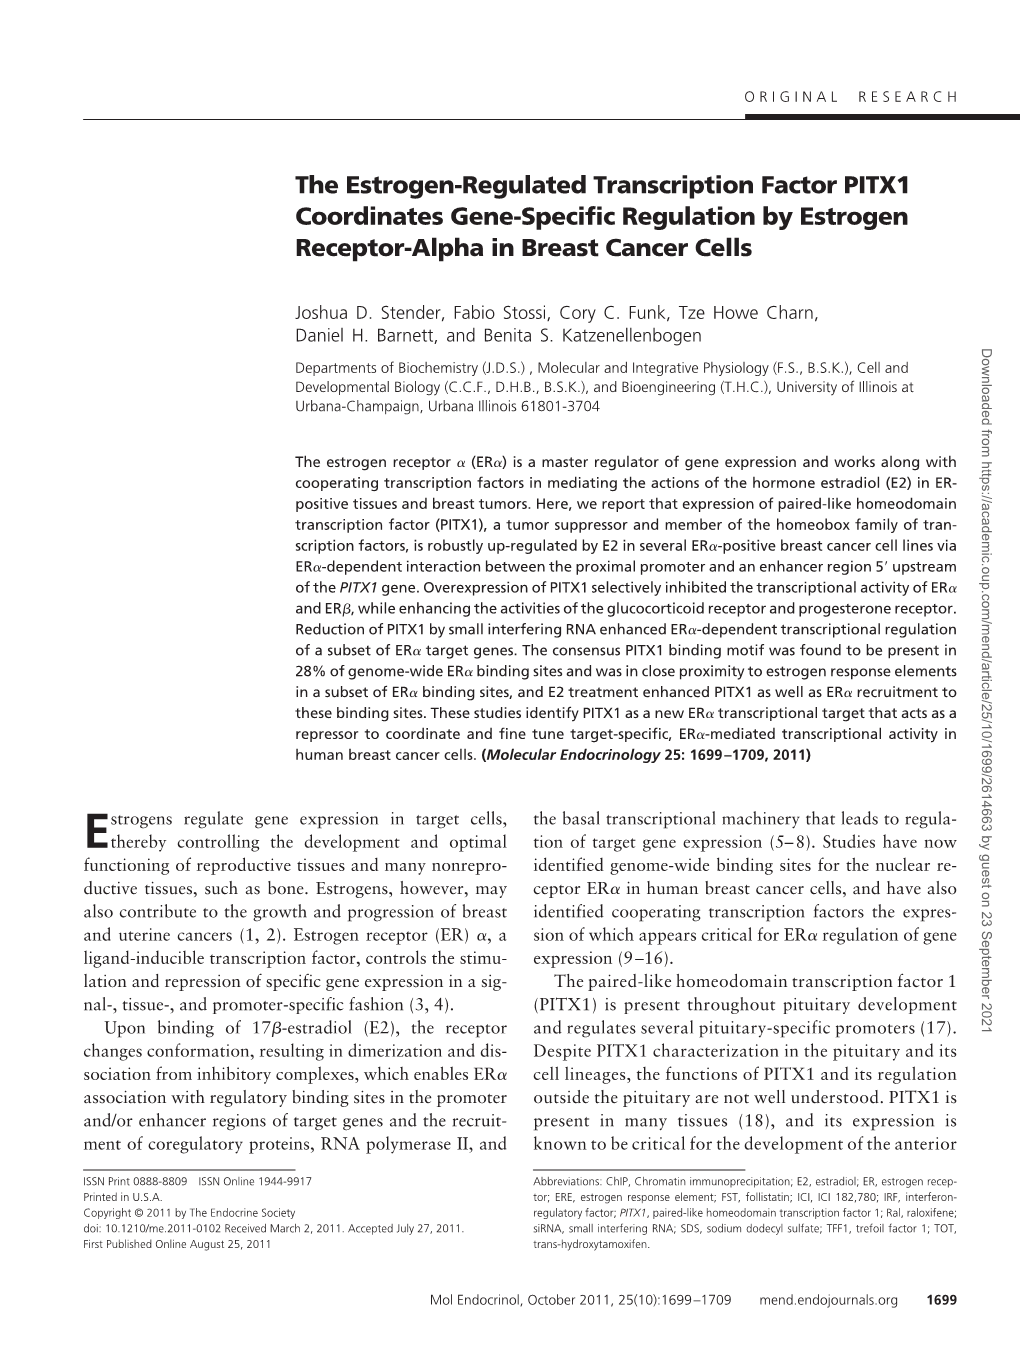 The Estrogen-Regulated Transcription Factor PITX1 Coordinates Gene-Specific Regulation by Estrogen Receptor-Alpha in Breast Cancer Cells